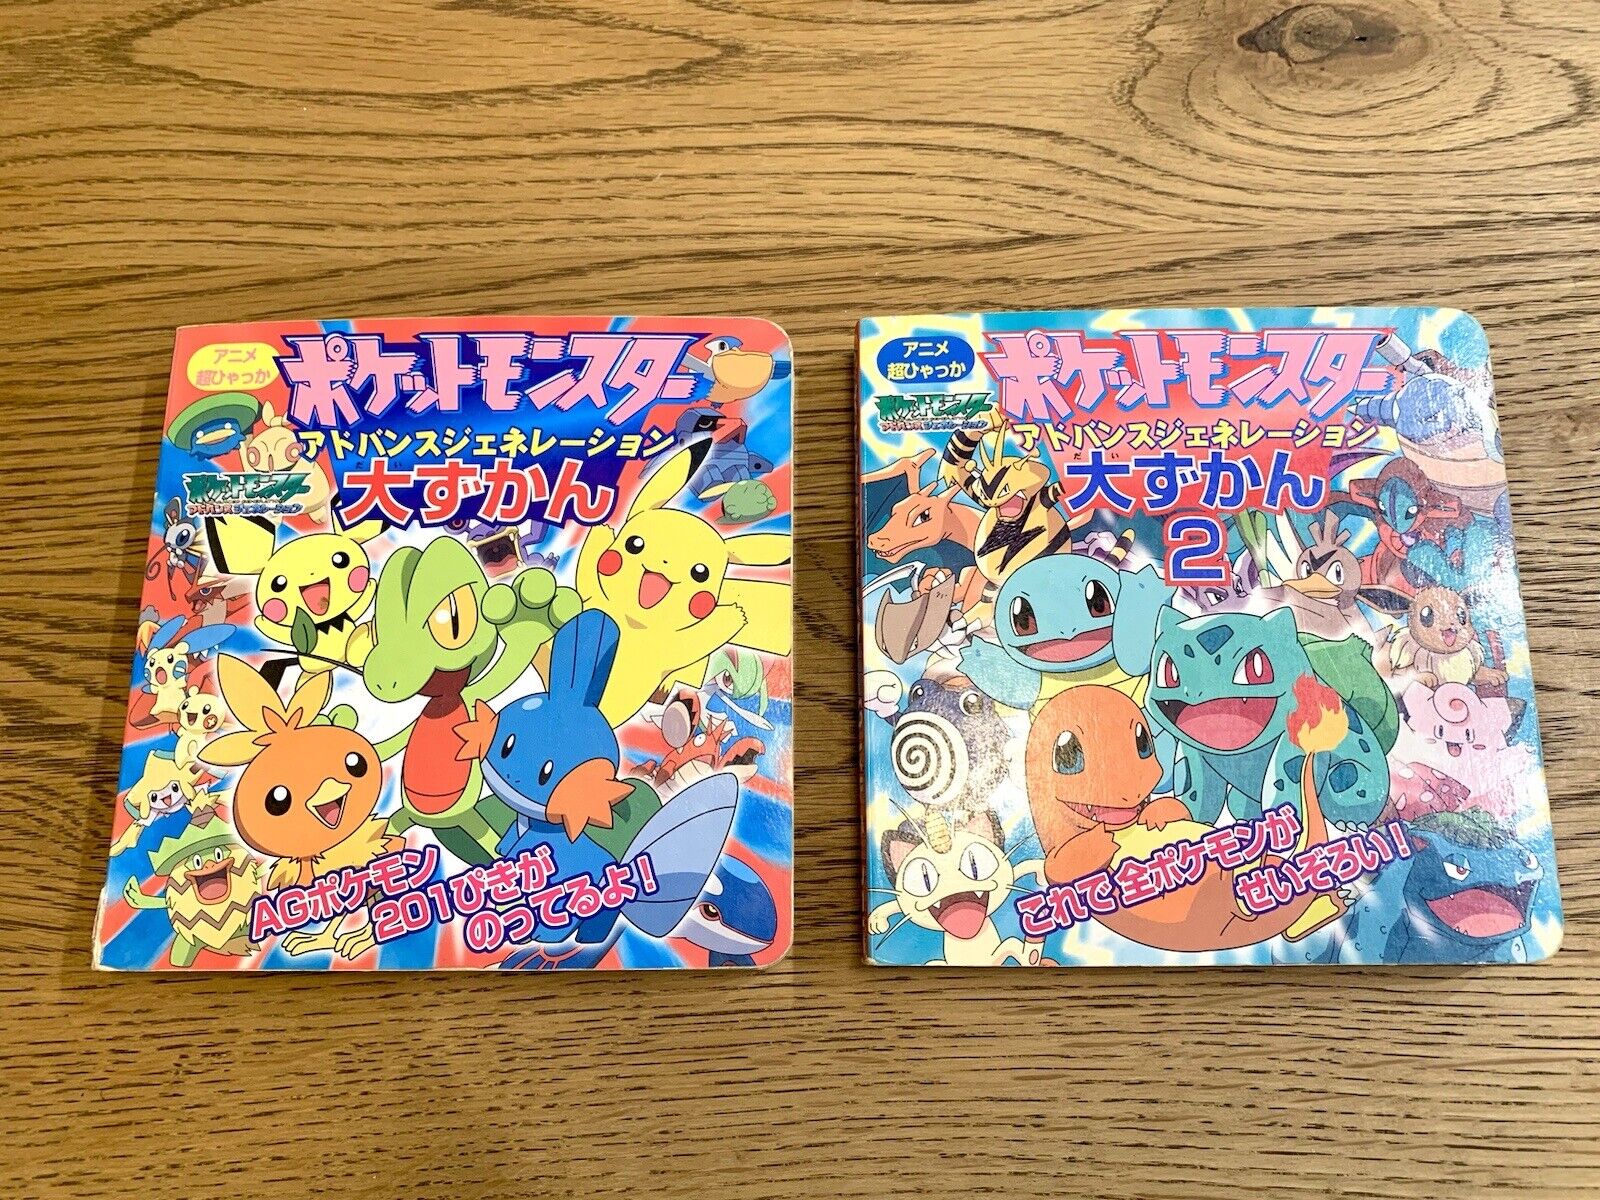 [2Set] Pokemon ADV Illustrated Book 2006 Shogakukan From Japan very Rare